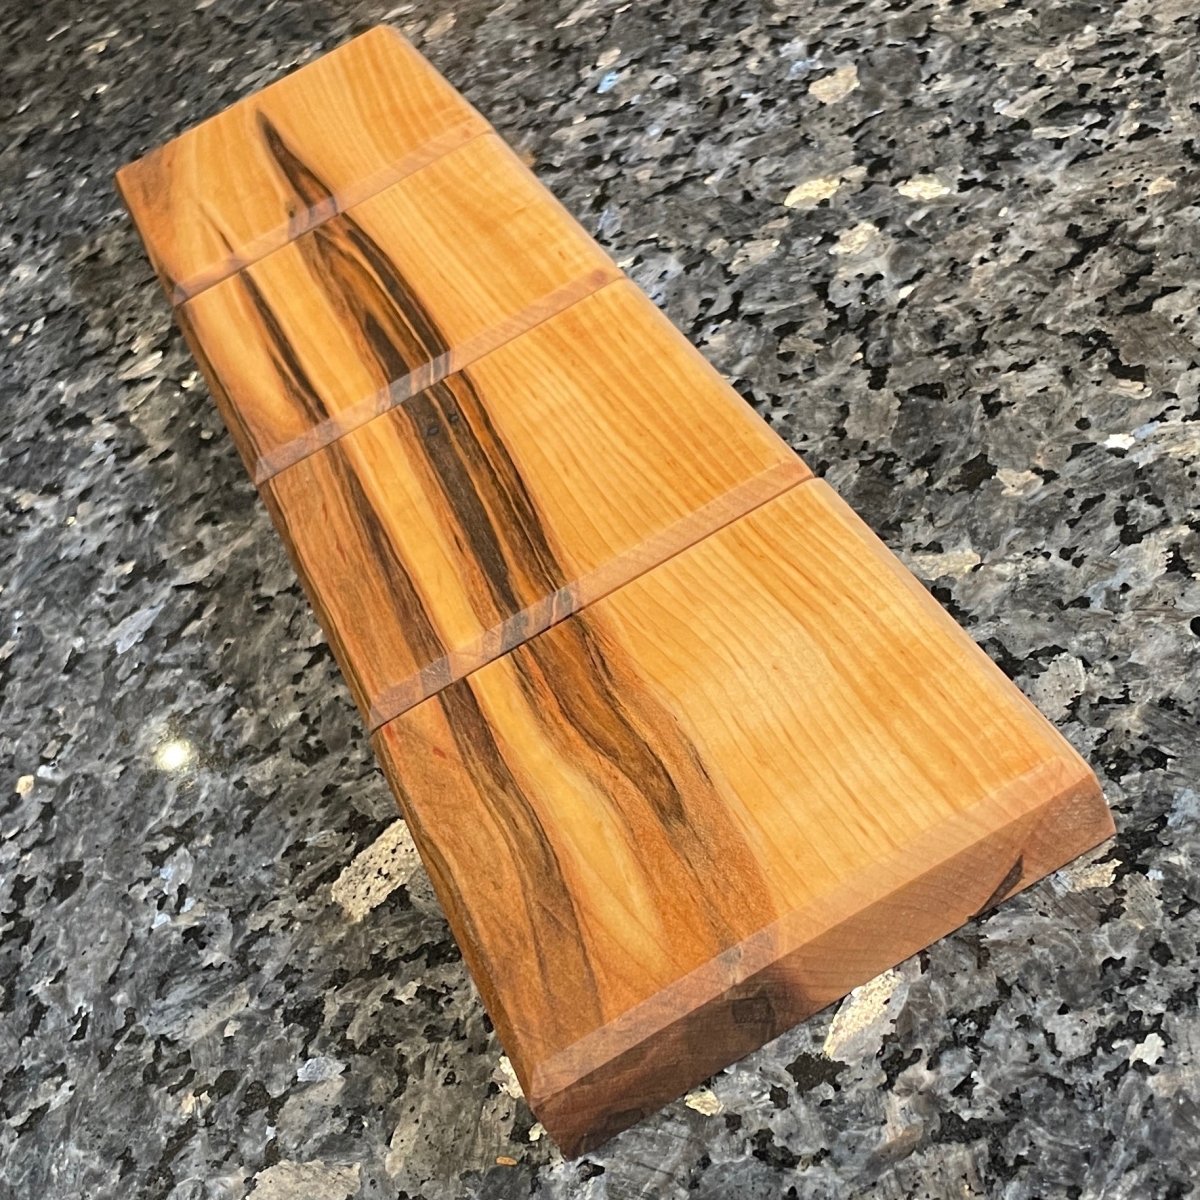 Set of 4 wooden coasters made with Ambrosia Maple. Beveleded edges